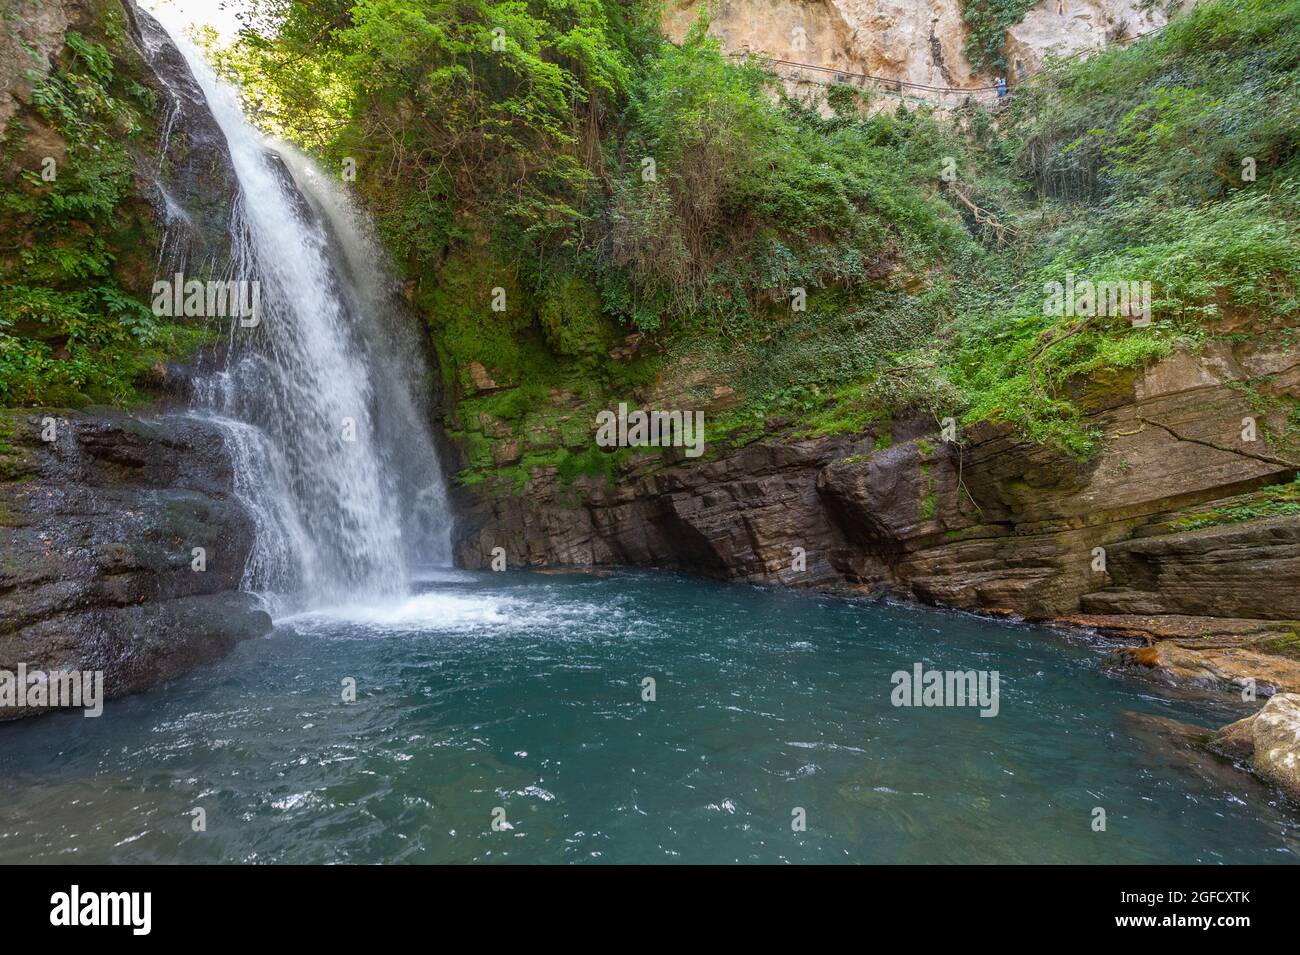 The Schioppo waterfall near Carpinone (Isernia) in Molise Stock Photo